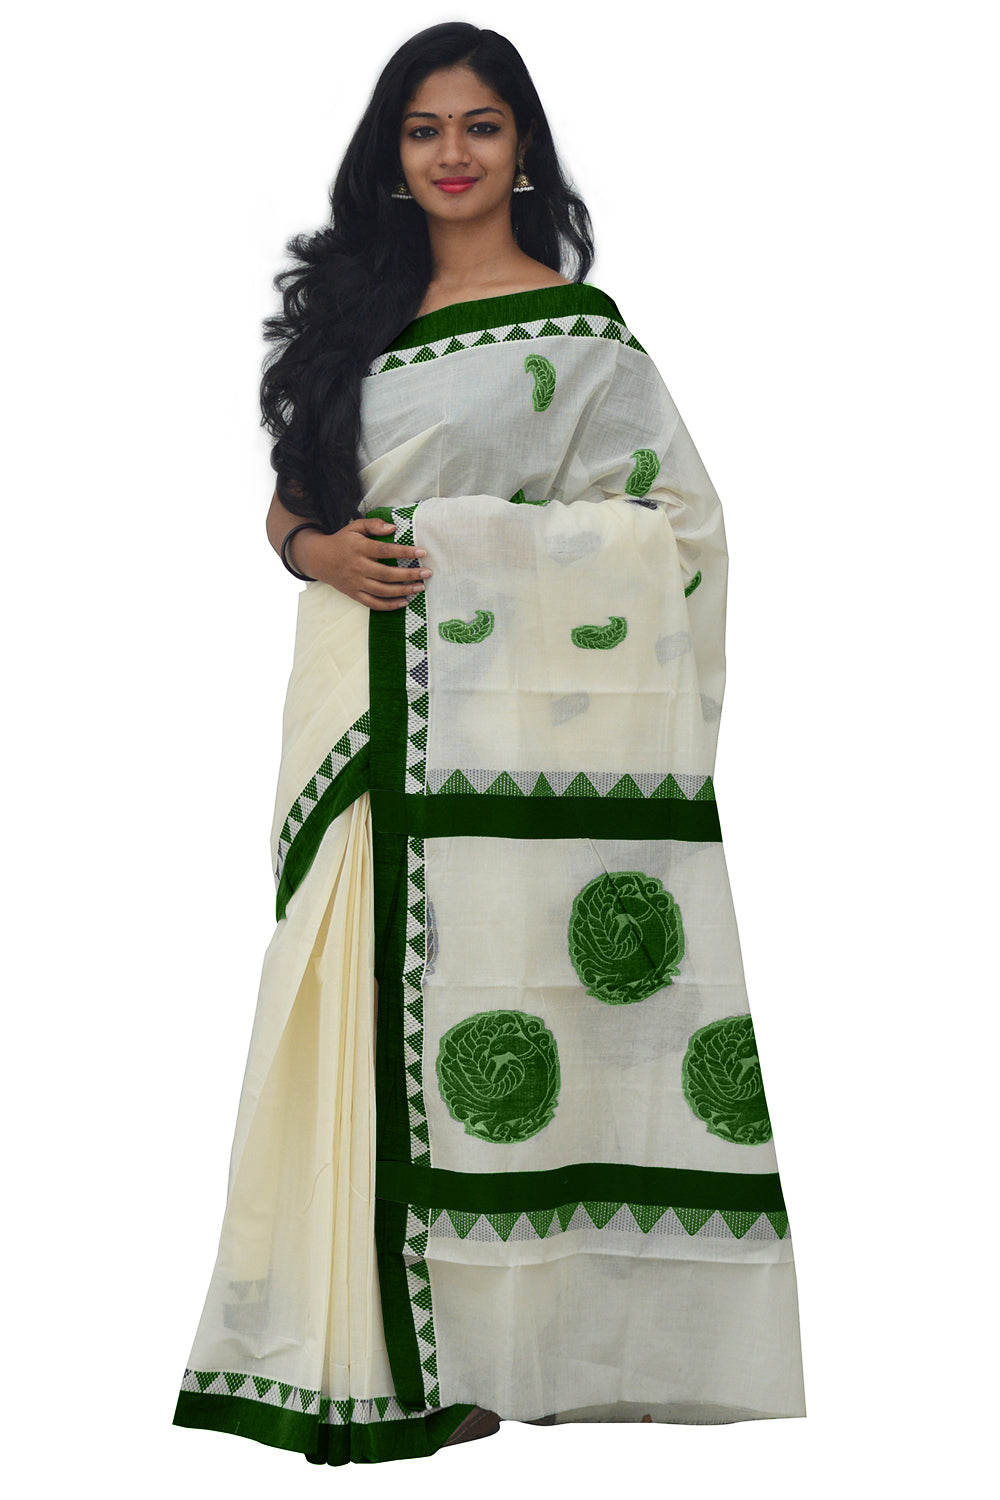 Kerala Saree with Dark Green Peacock Art Embroidery Design